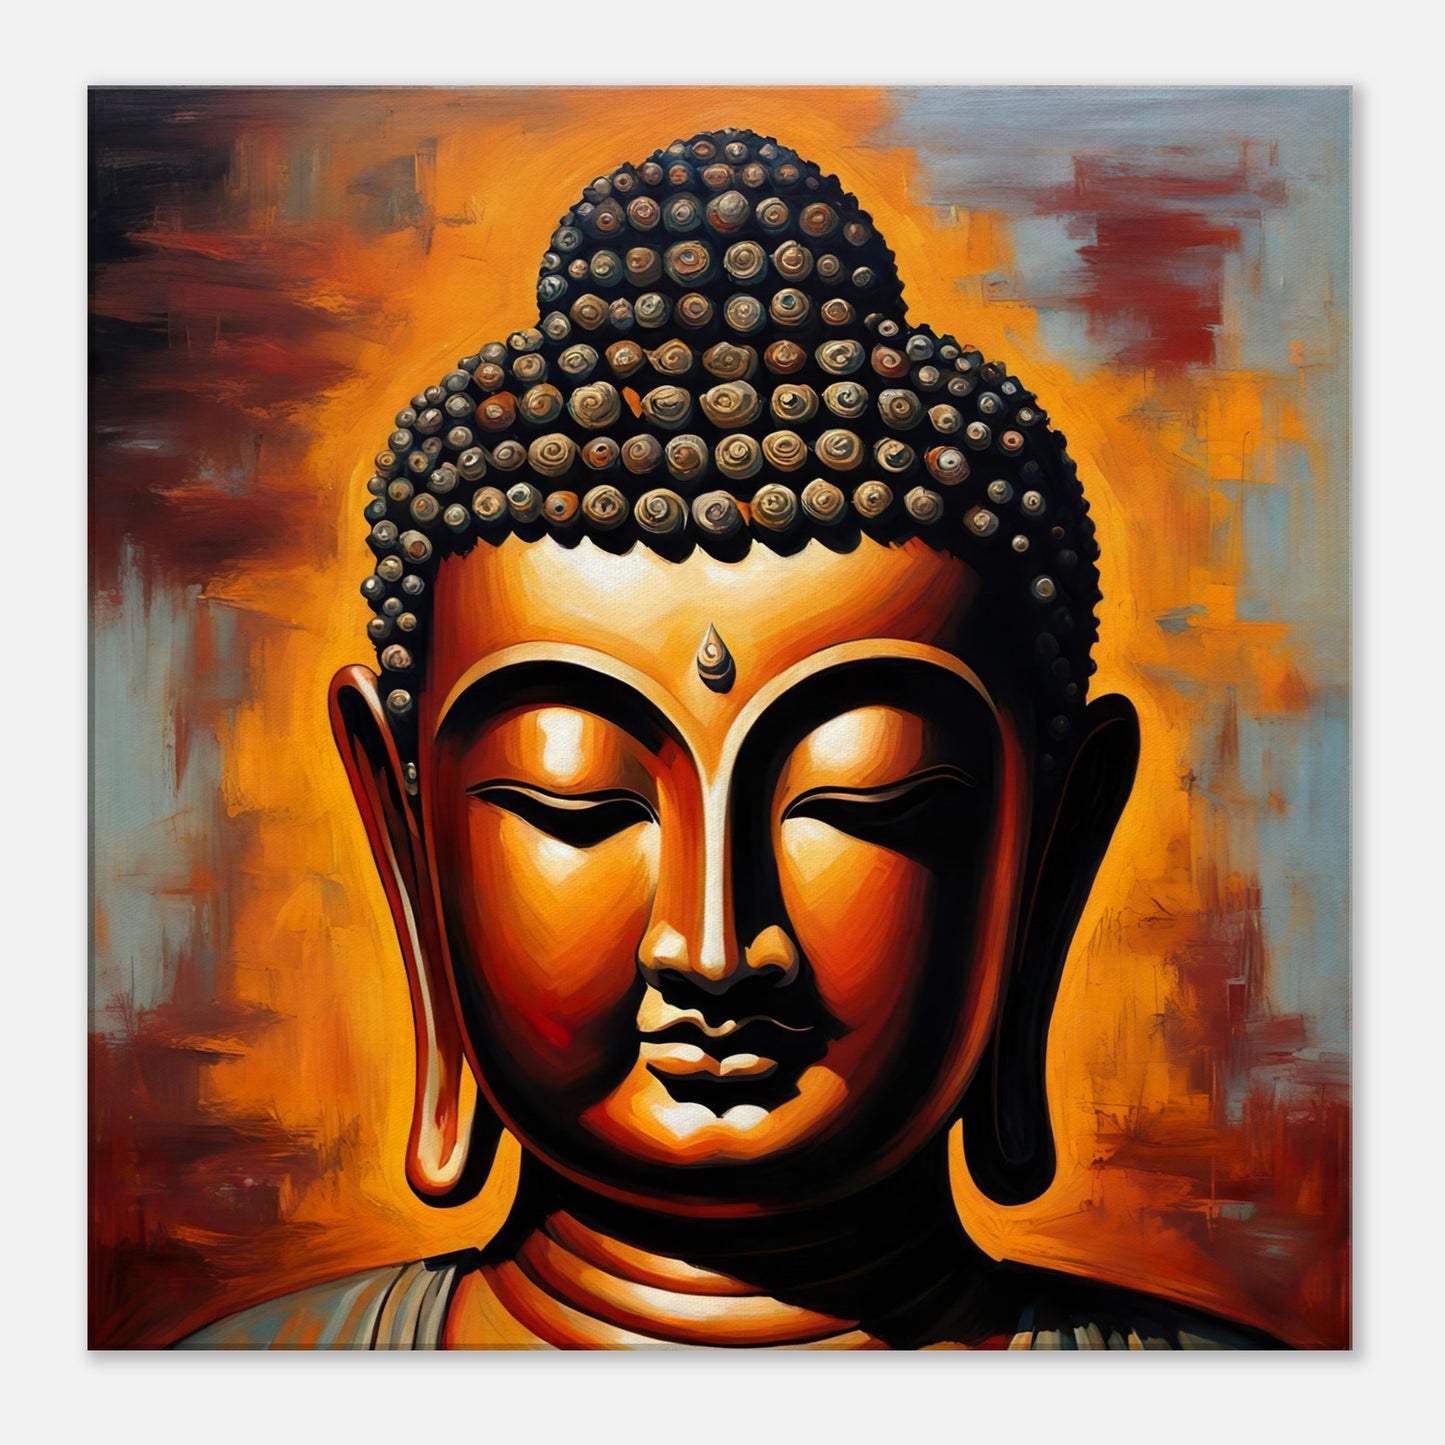 Leinwandbild - Buddha - Malerischer Stil, KI-Kunst - RolConArt, Spirituelle Vielfalt, 60x60-cm-24x24